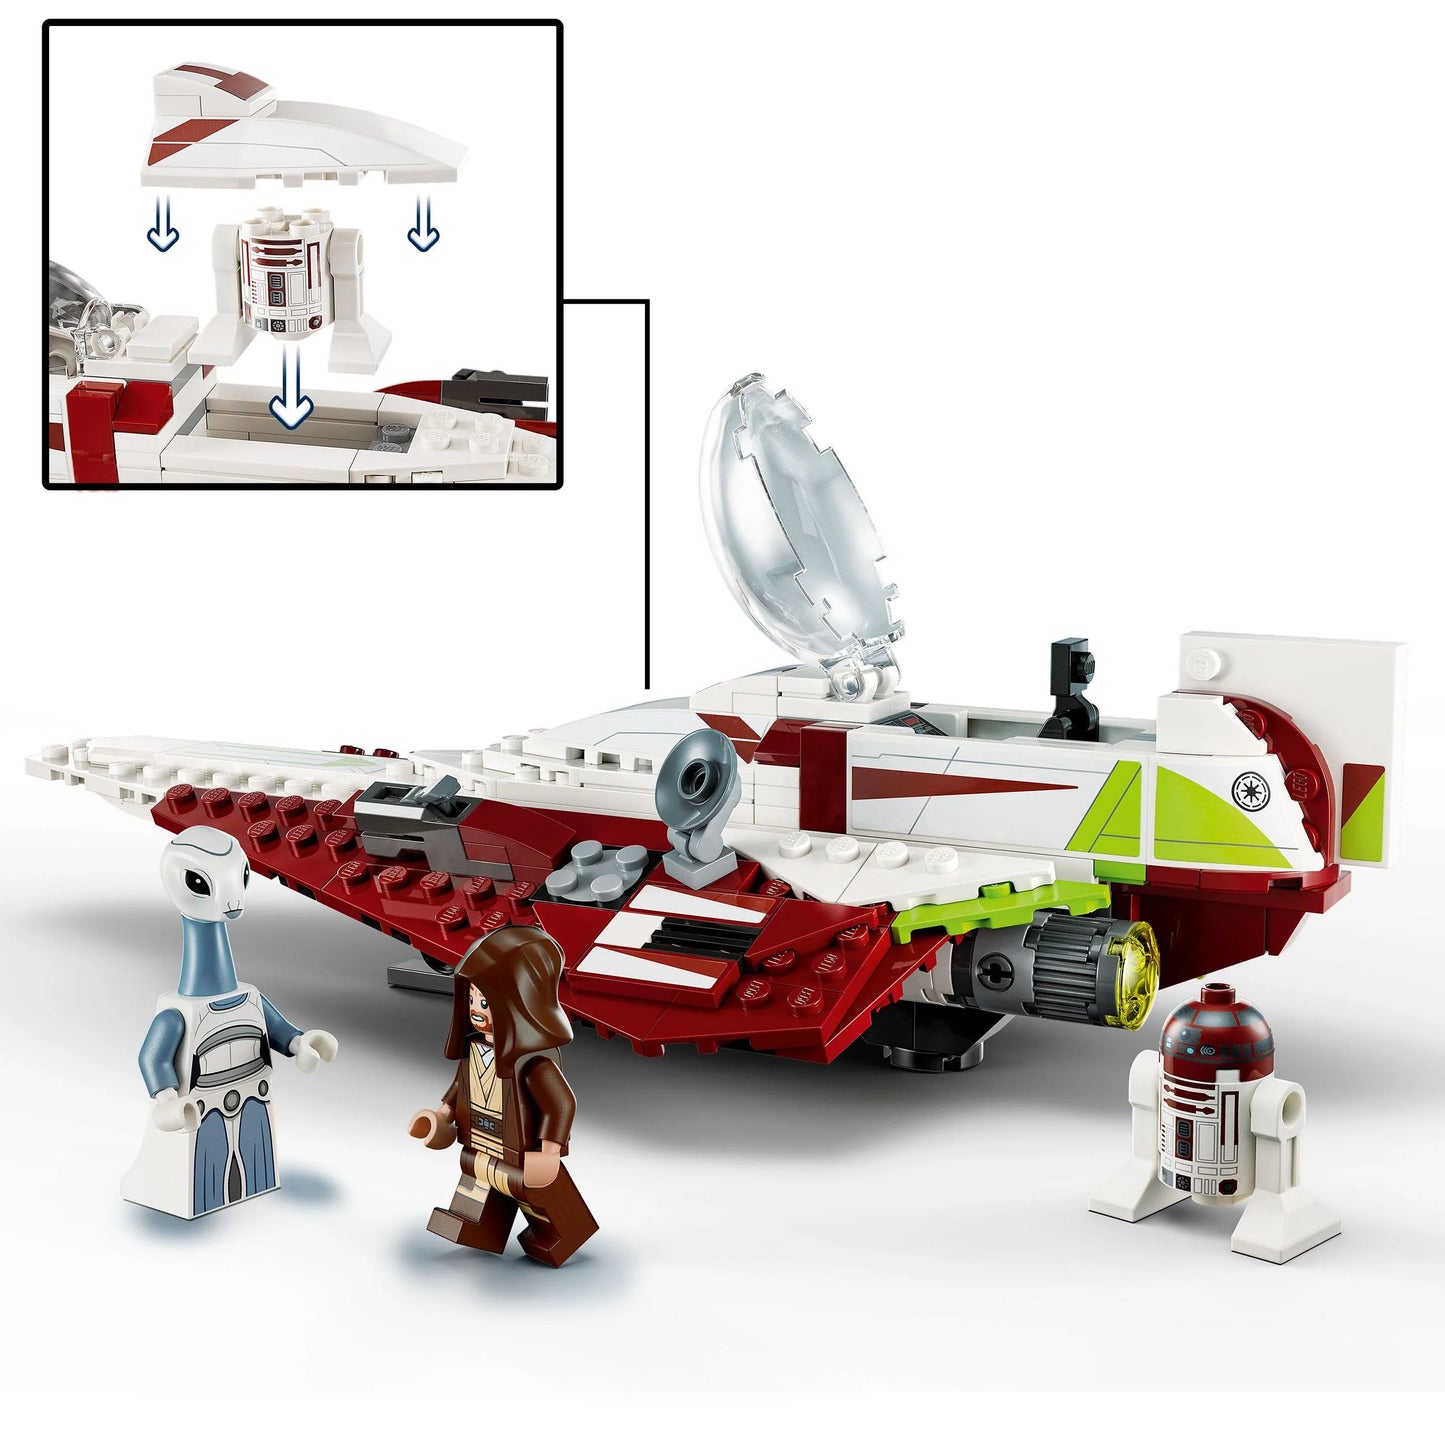 De Jedi Starfighter van Obi-Wan Kenobi-LEGO Star Wars